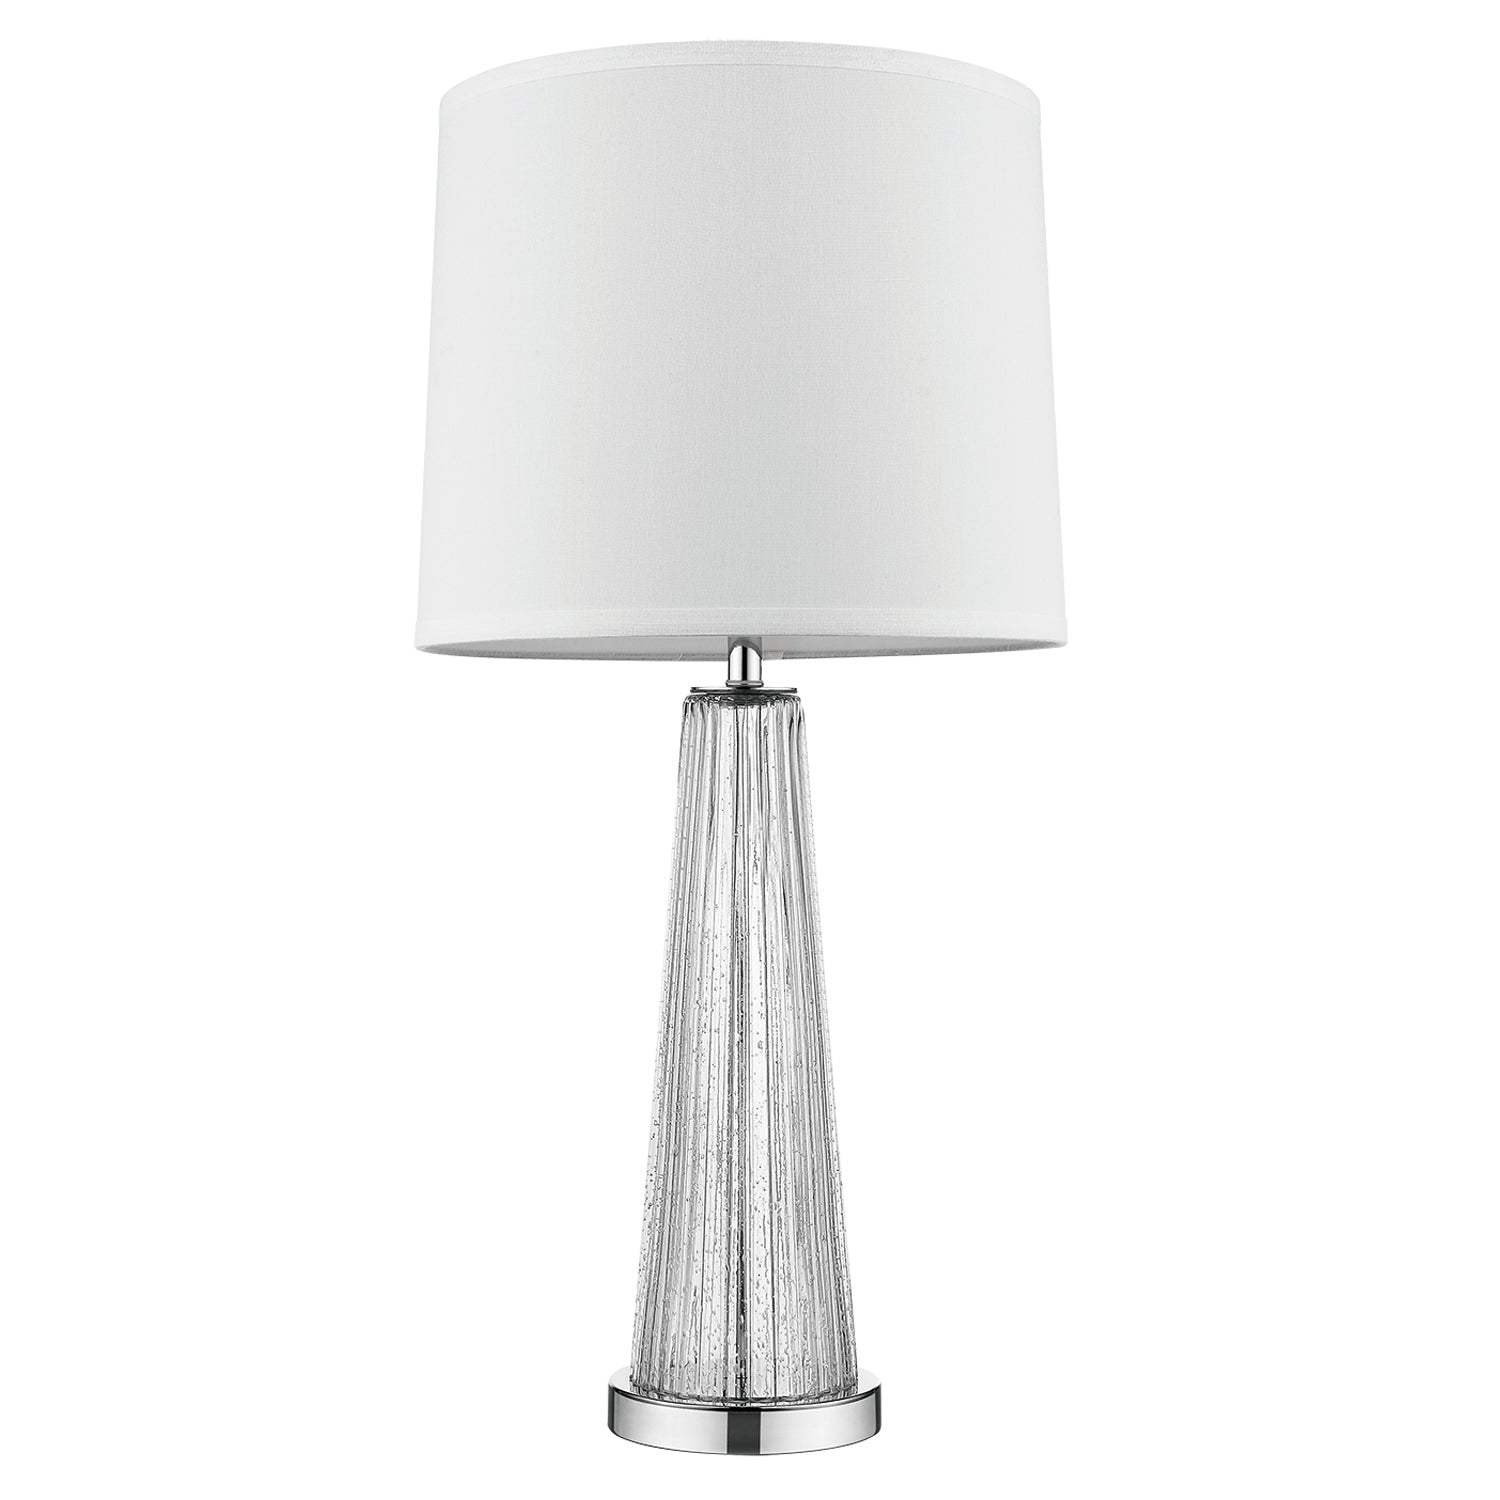 Chiara Table Lamp Polished Chrome